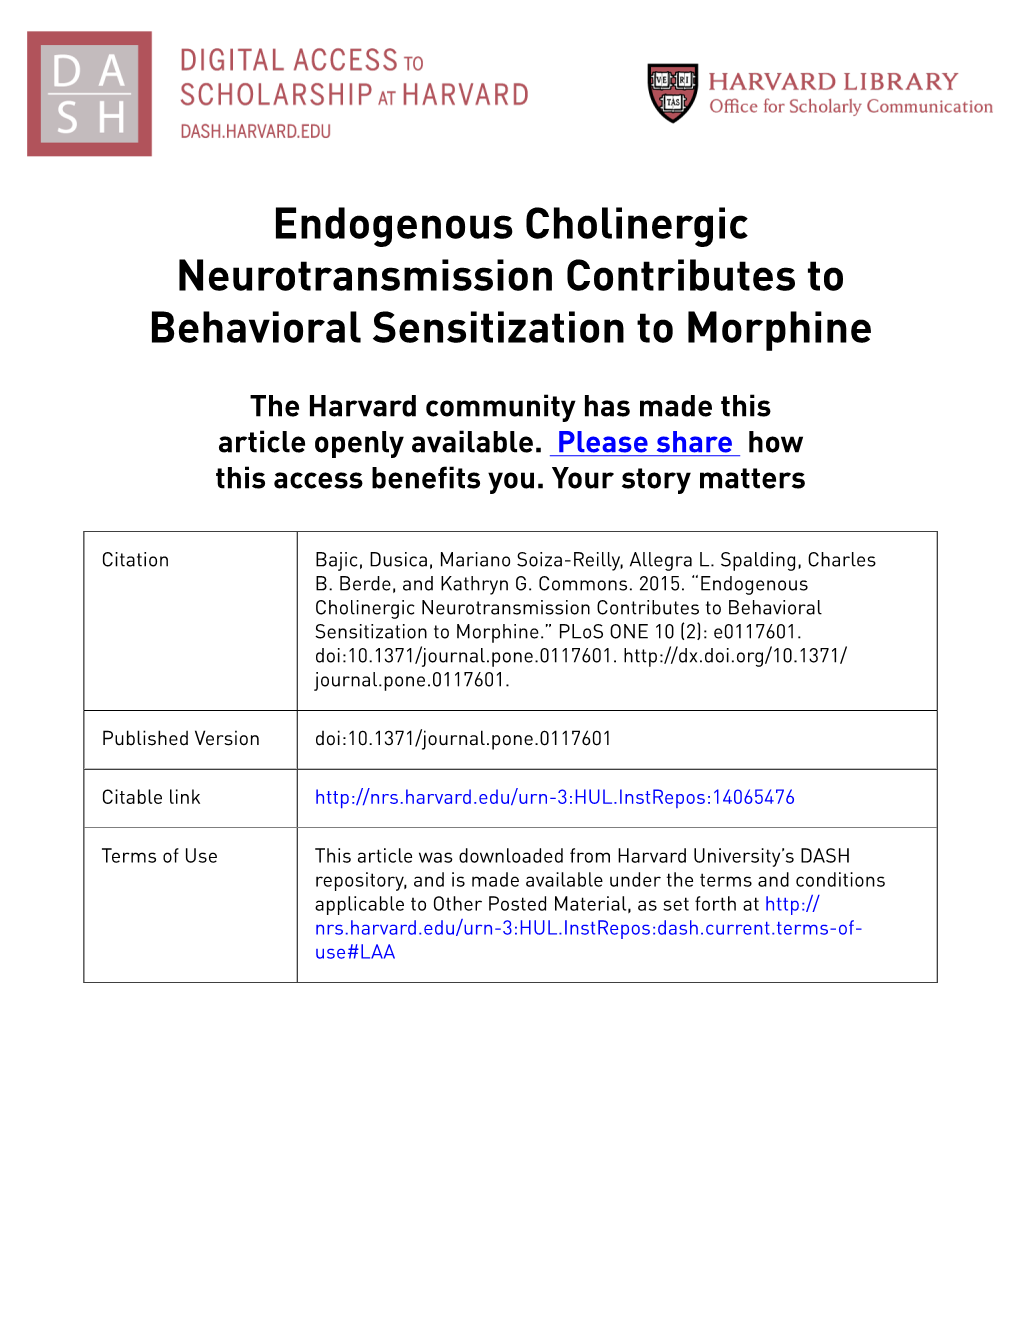 Endogenous Cholinergic Neurotransmission Contributes to Behavioral Sensitization to Morphine